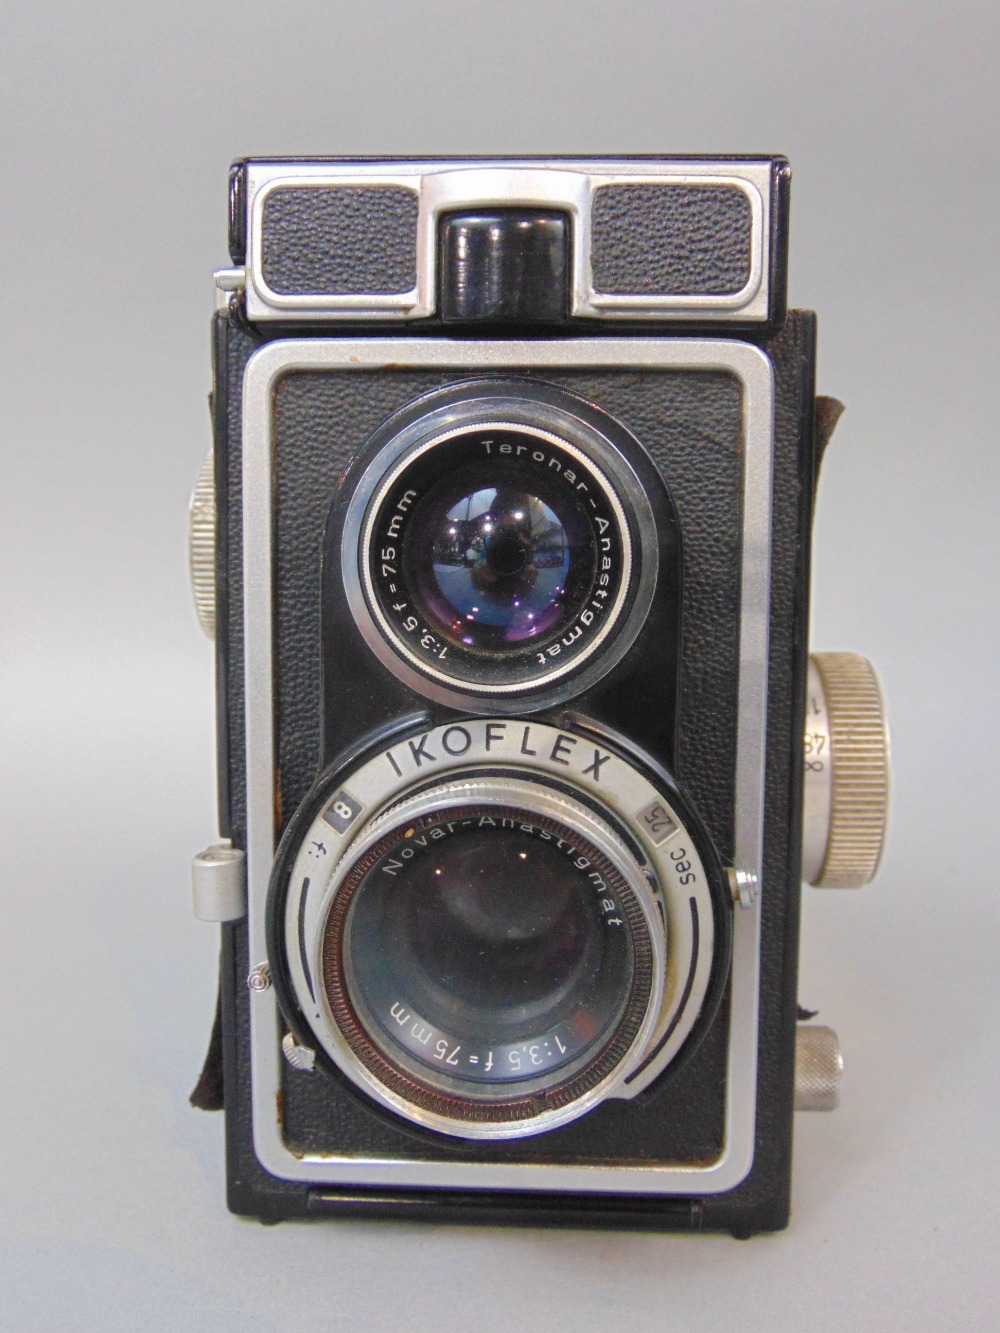 Ikoflex twin lens vintage camera with Novar-Anastigmat Teronar Anastigmat twin lens - Image 2 of 7